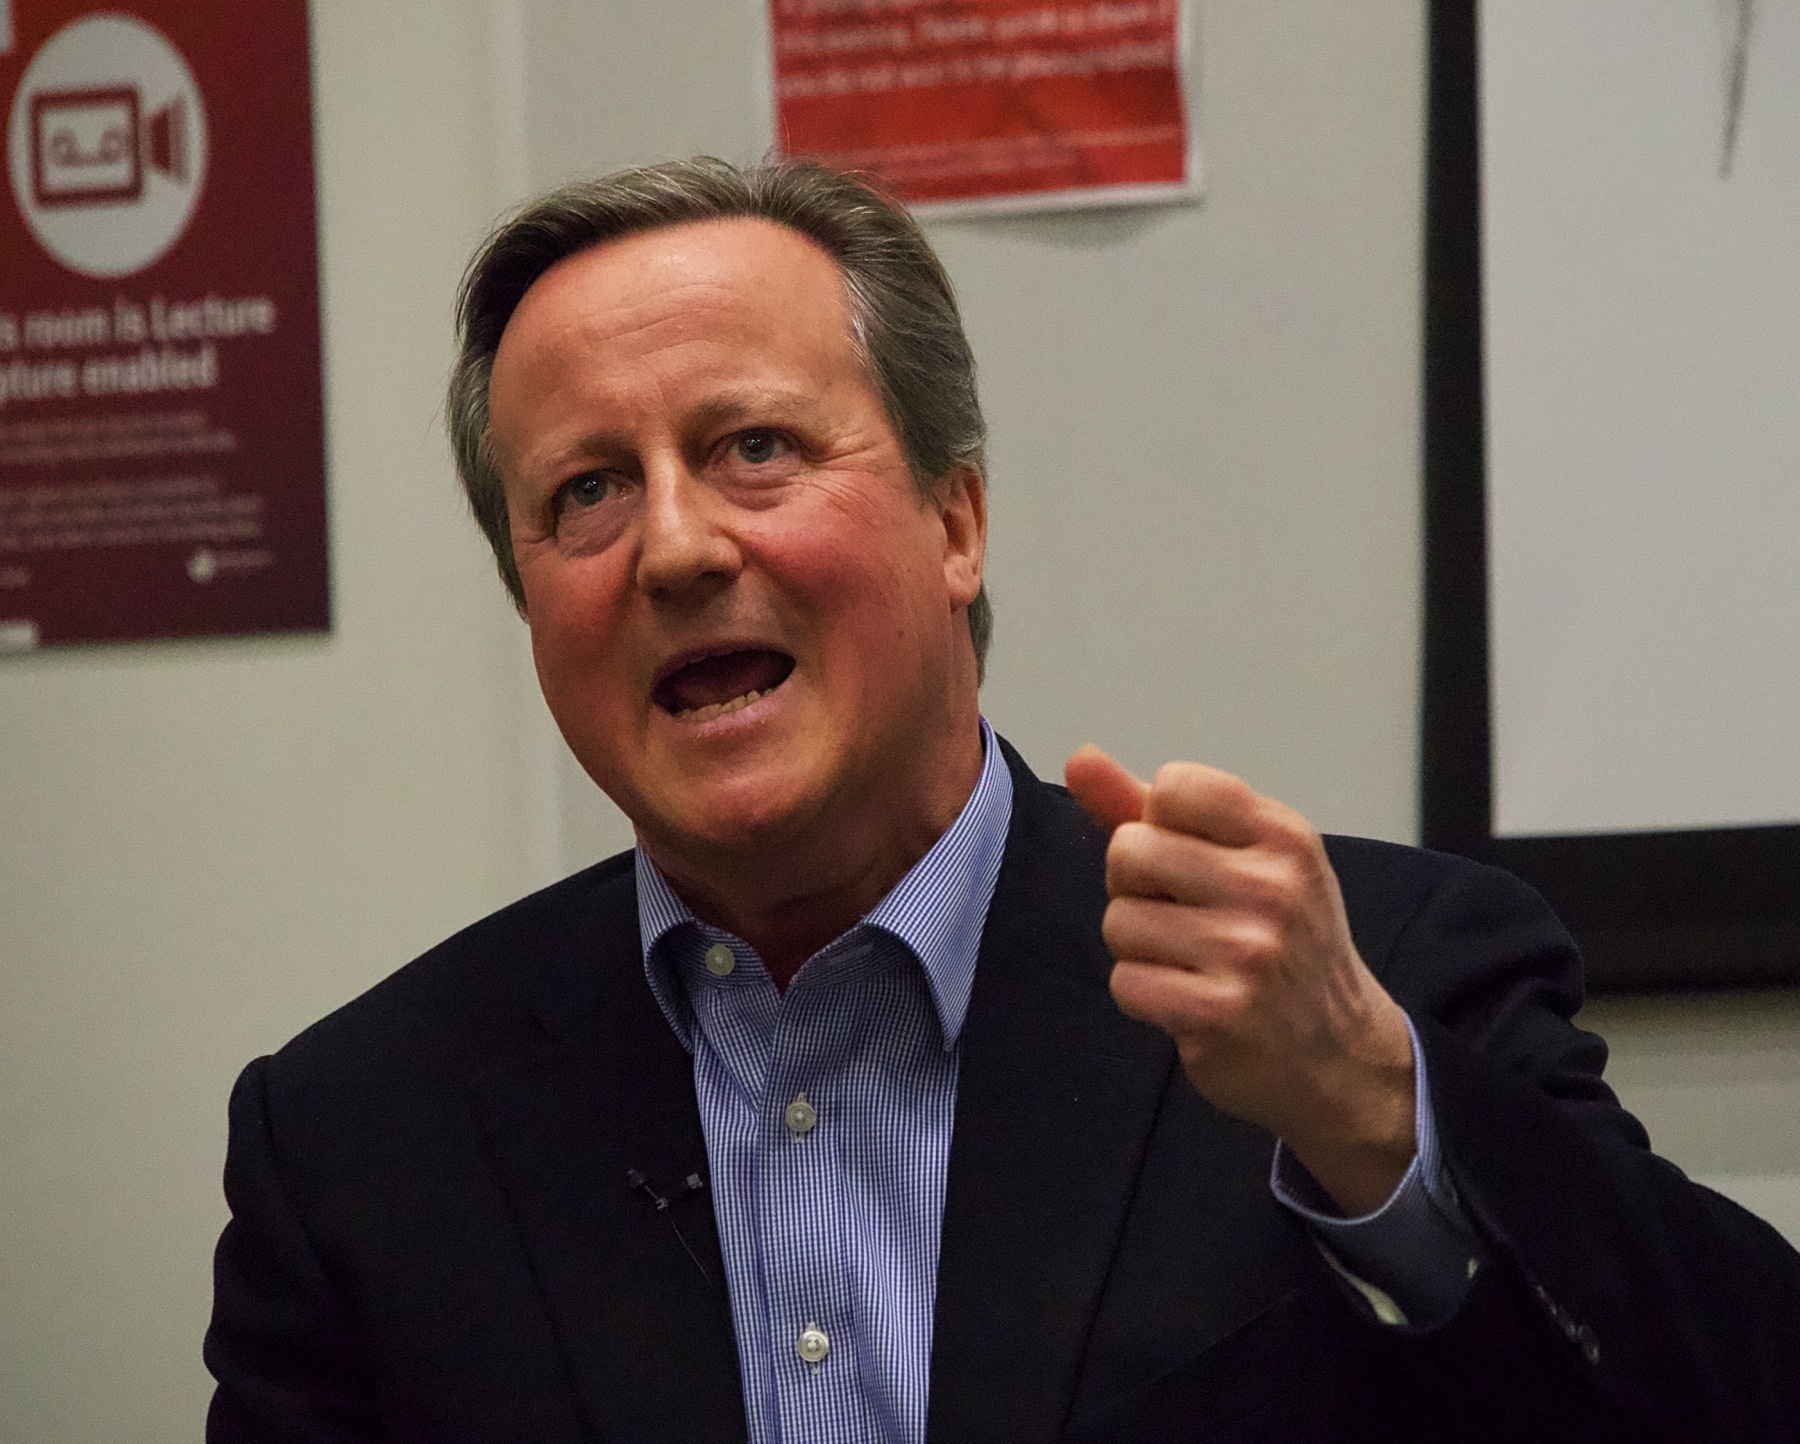 David Cameron at City, University of London. 